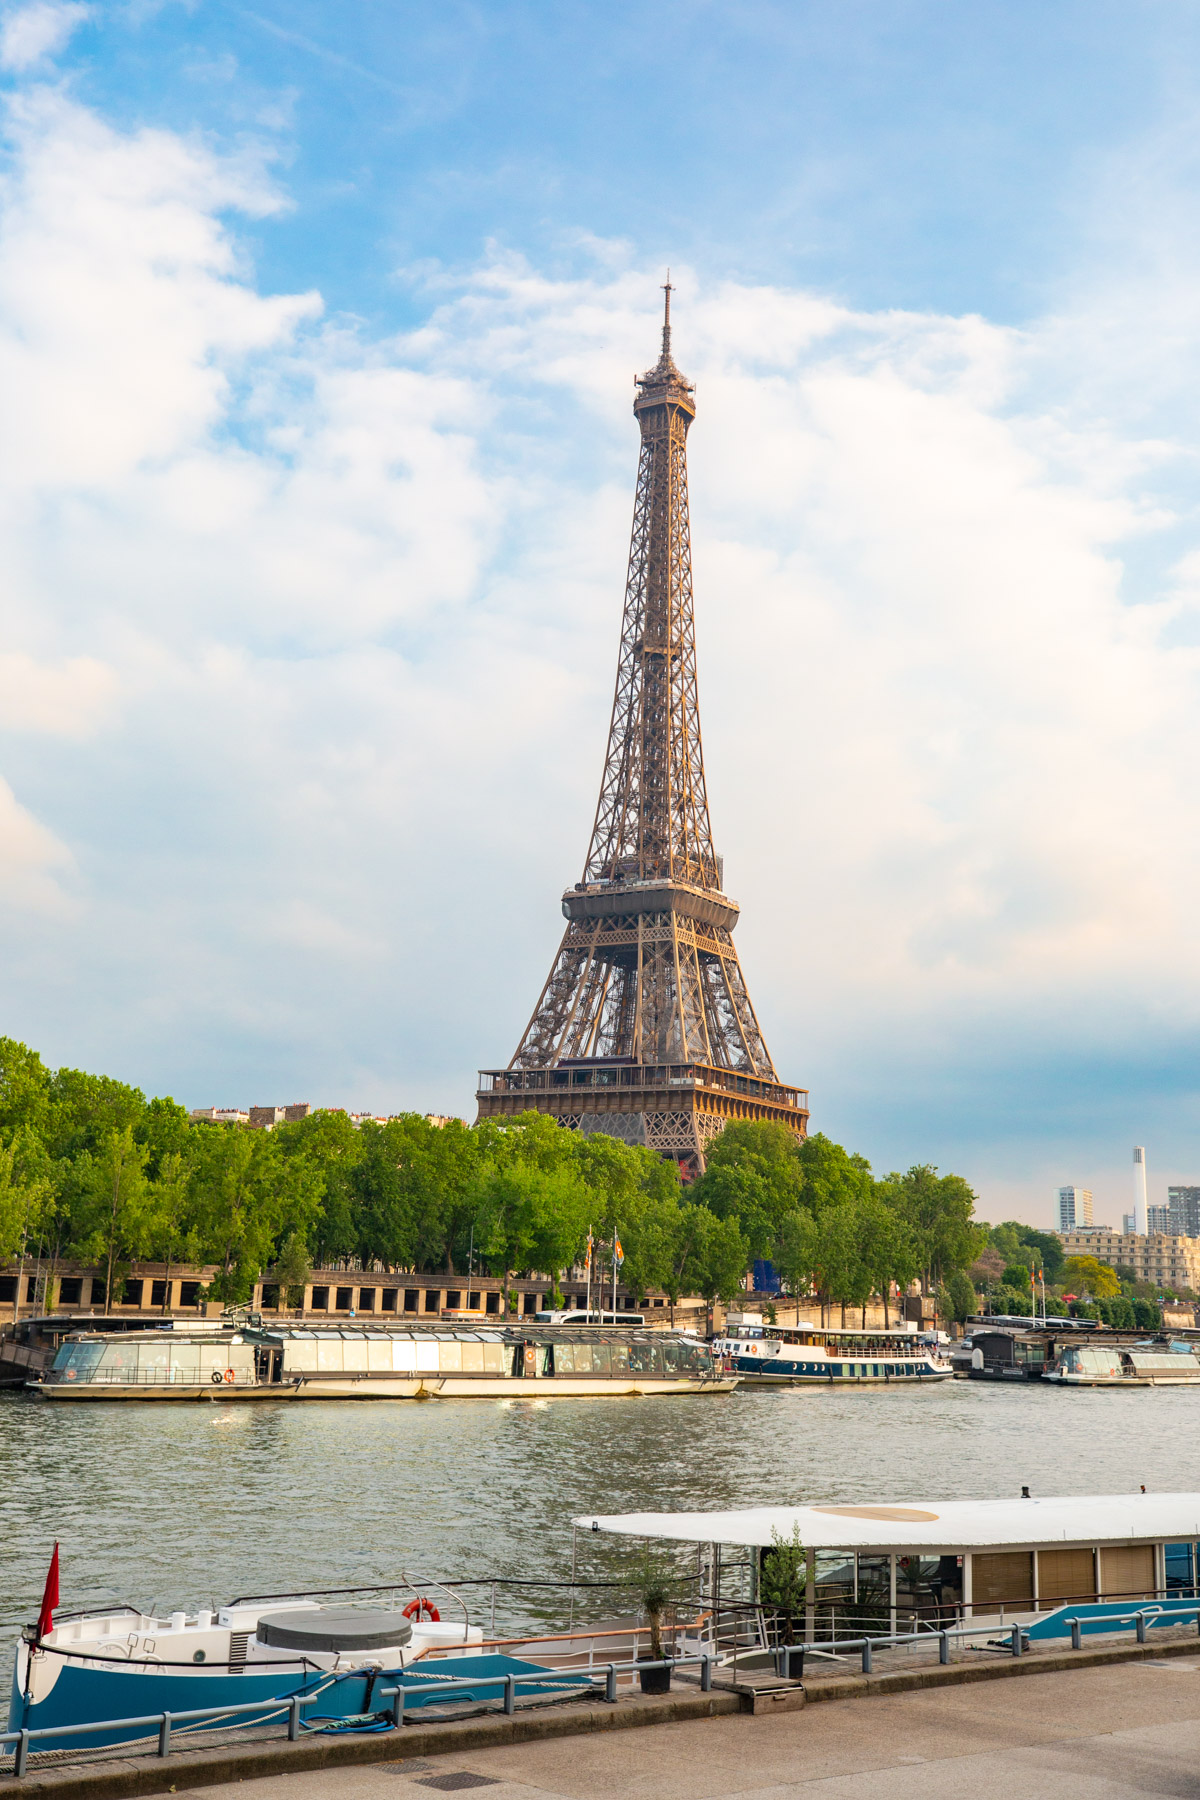 10 Eiffel Tower Replicas Around the World